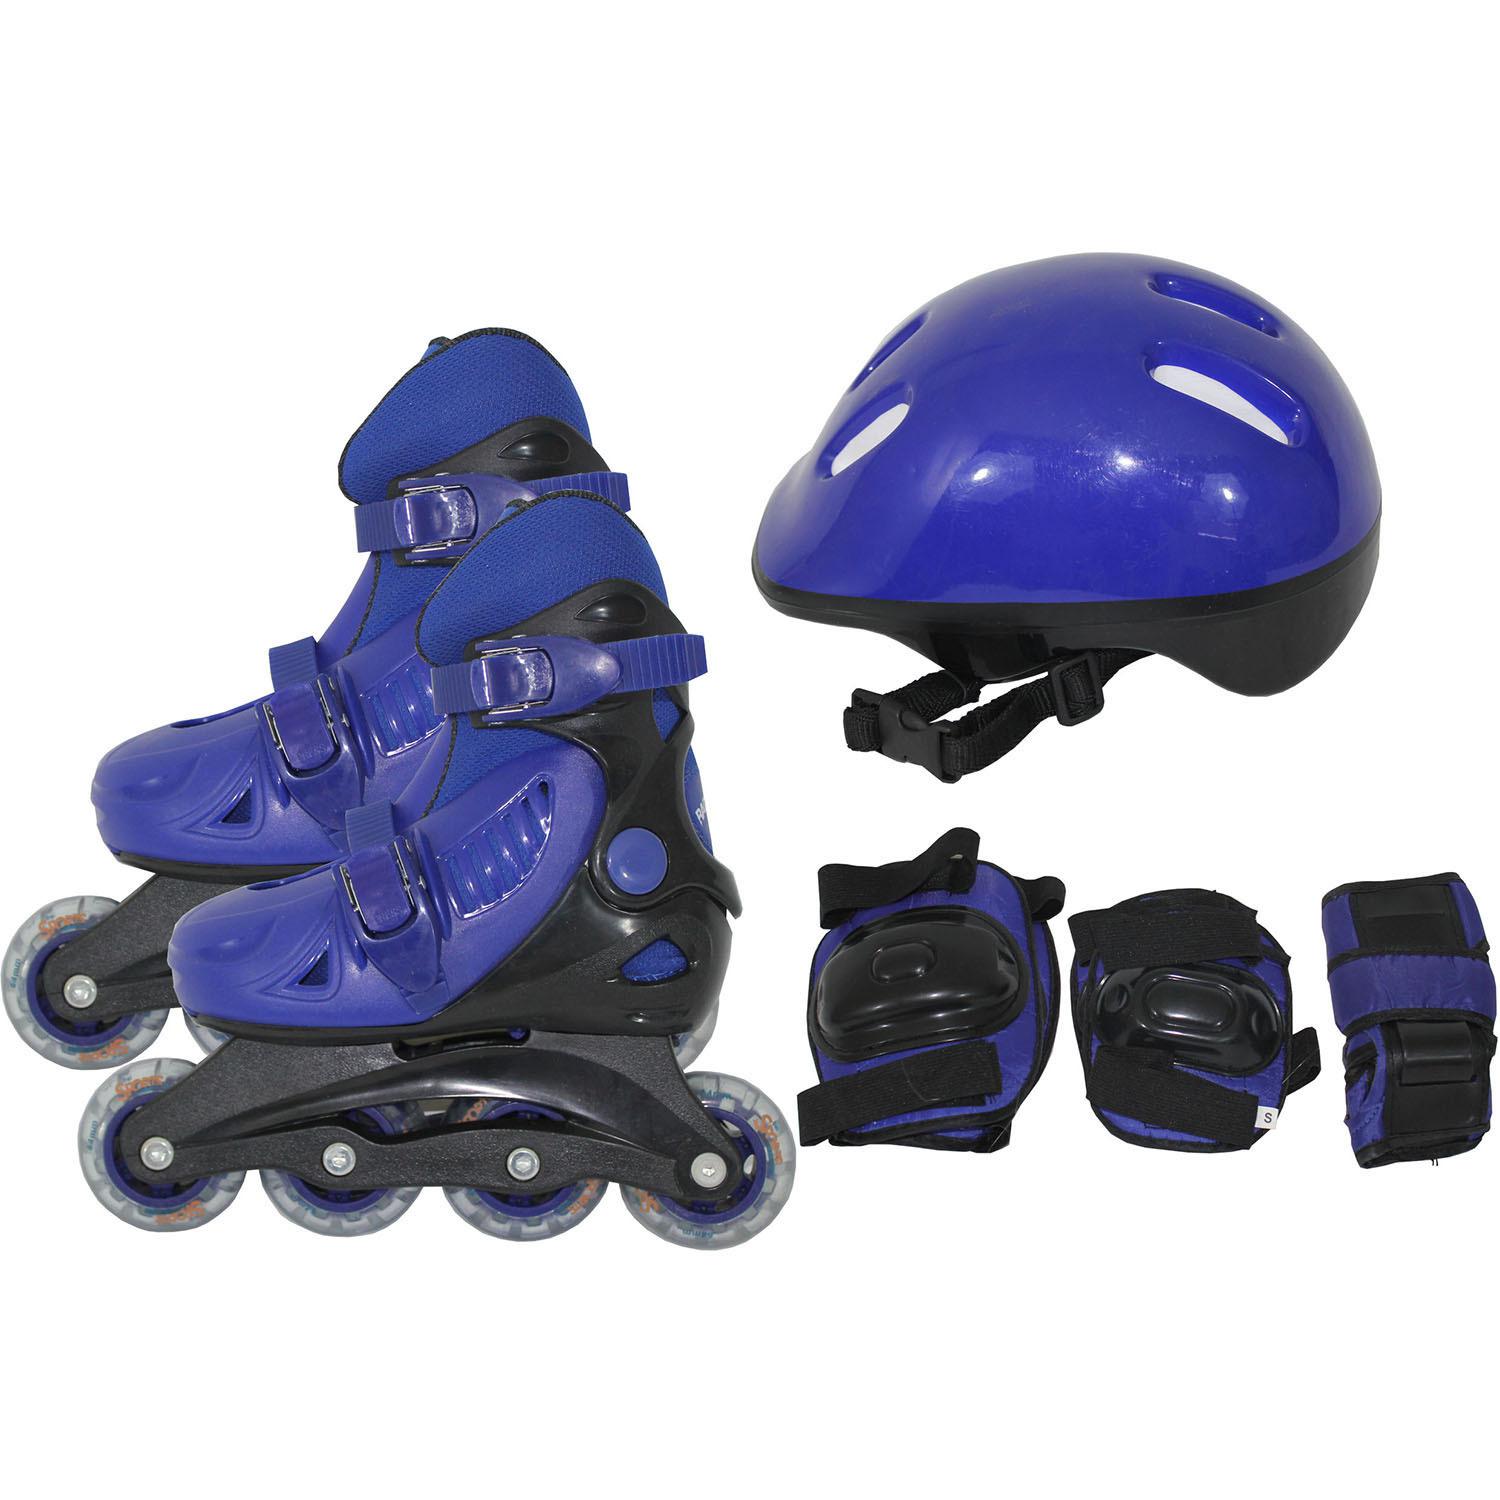 Kit de Patins Radical Rollers Completo Azul - Bel Sports é bom? Vale a pena?